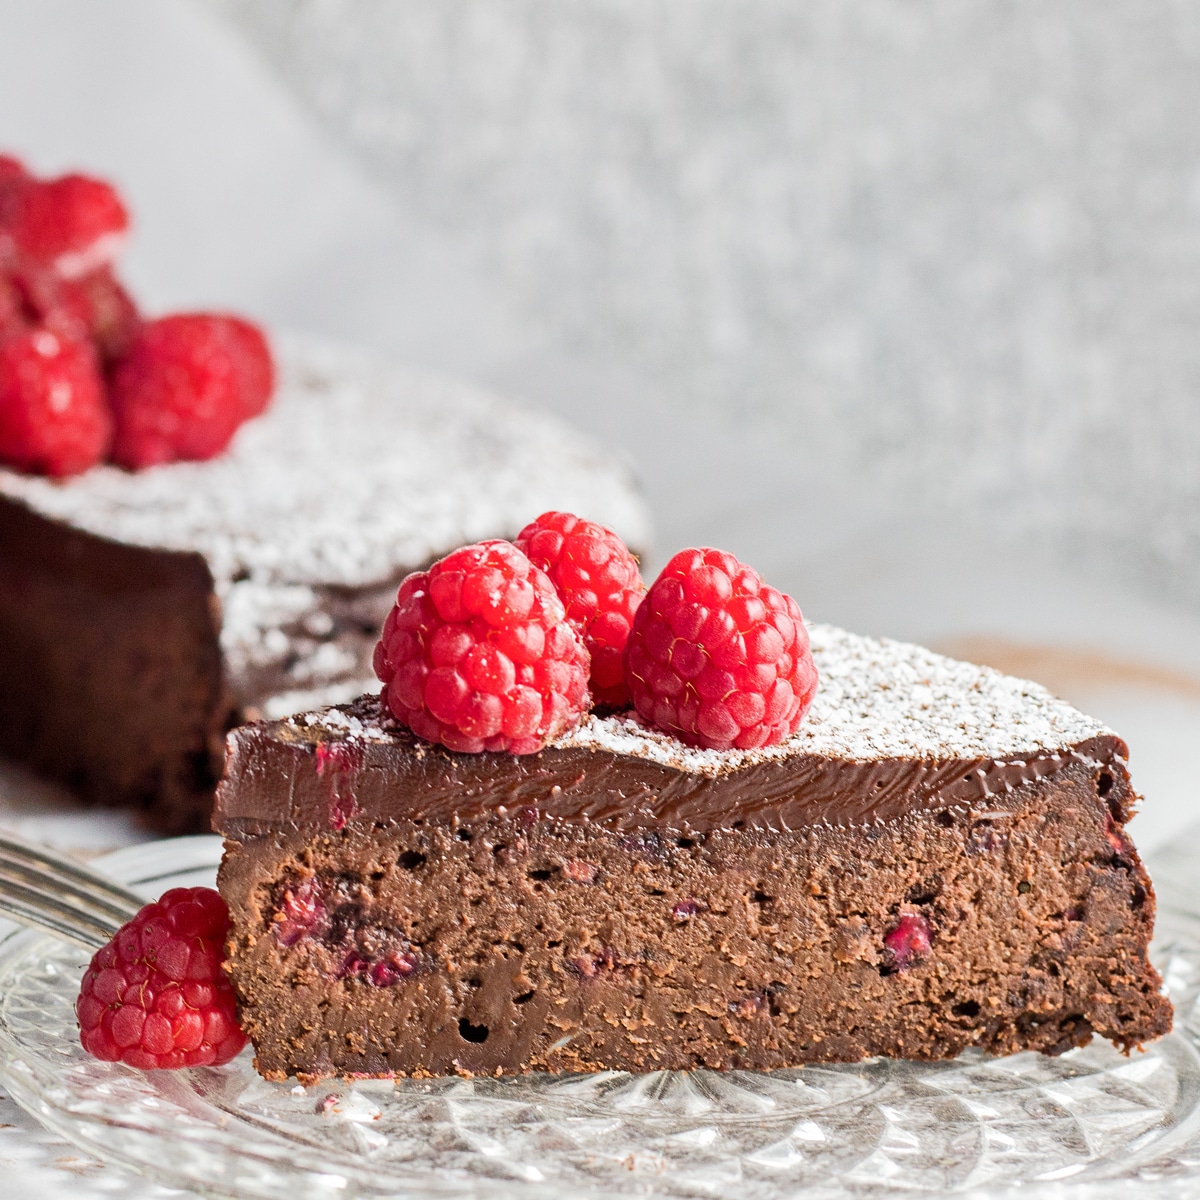 Kue raspberry coklat tanpa tepung yang diiris dengan raspberry di atasnya.